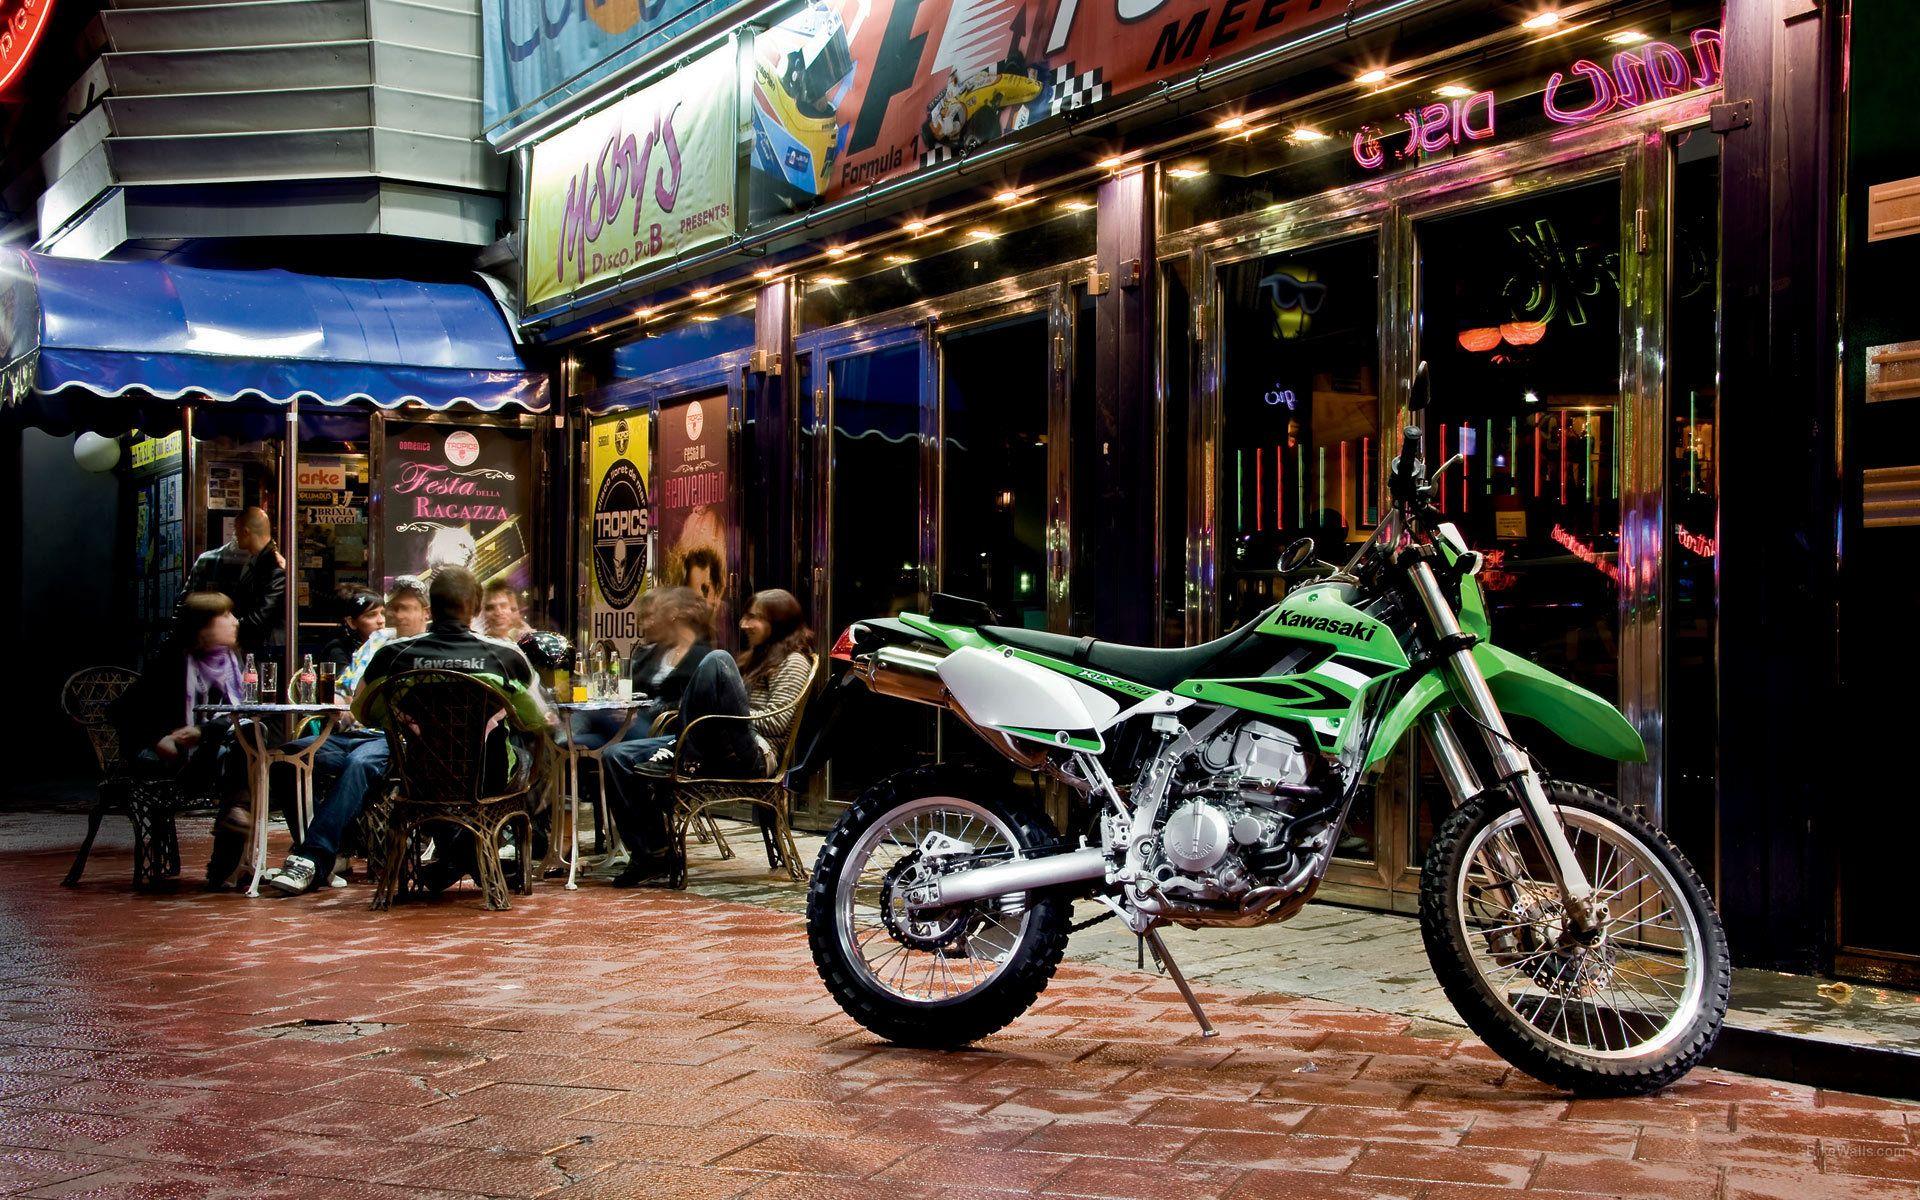 New reliable motorcycle Kawasaki KLX 250 wallpaper and image